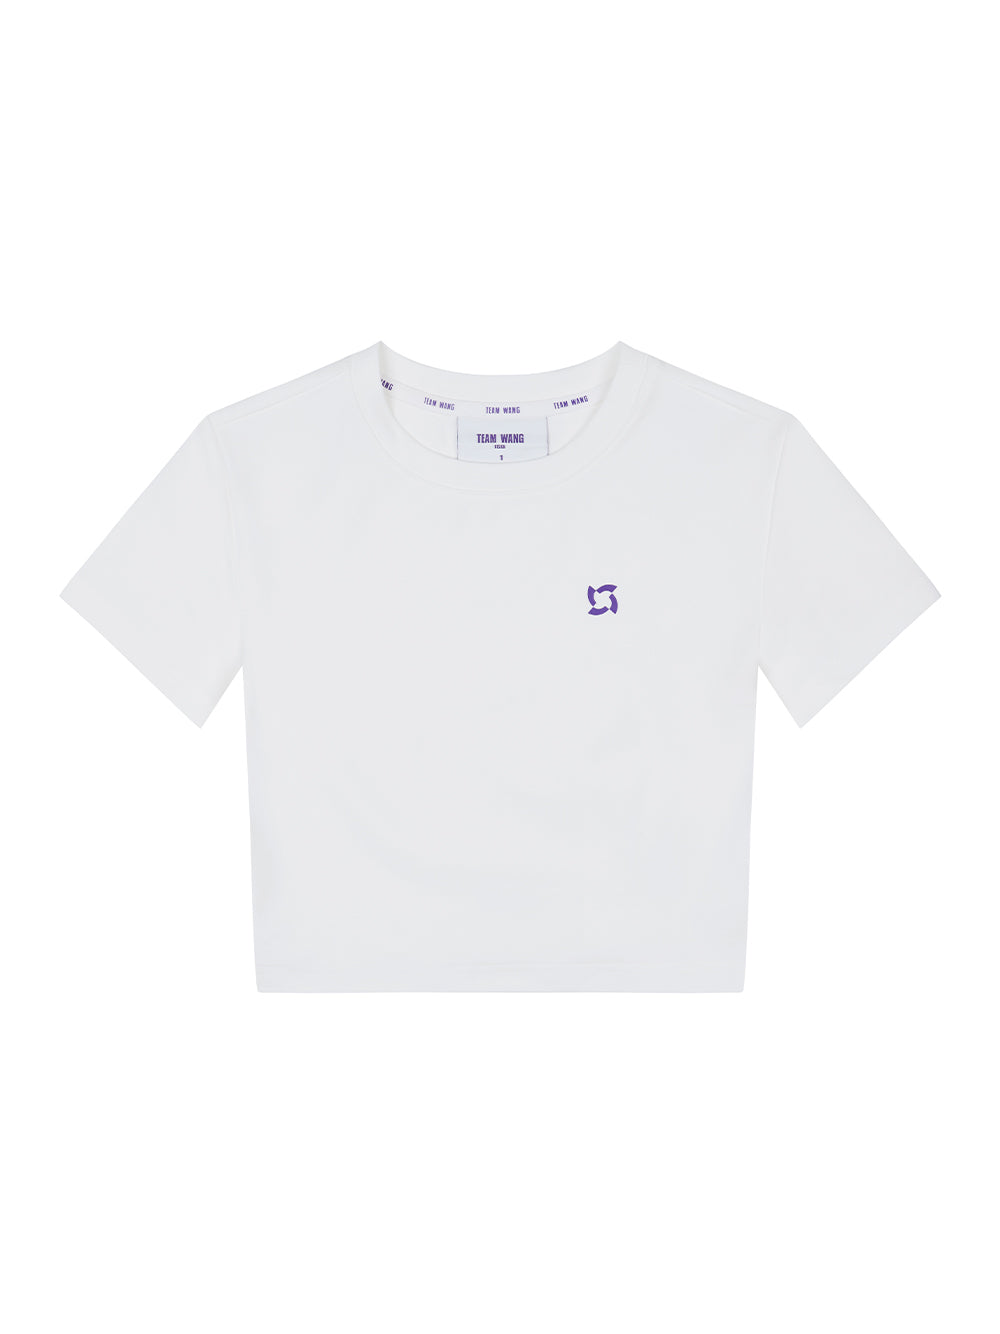 TEAM WANG design x CHUANG ASIA Bodycon Short-Sleeved T-Shirt (White)